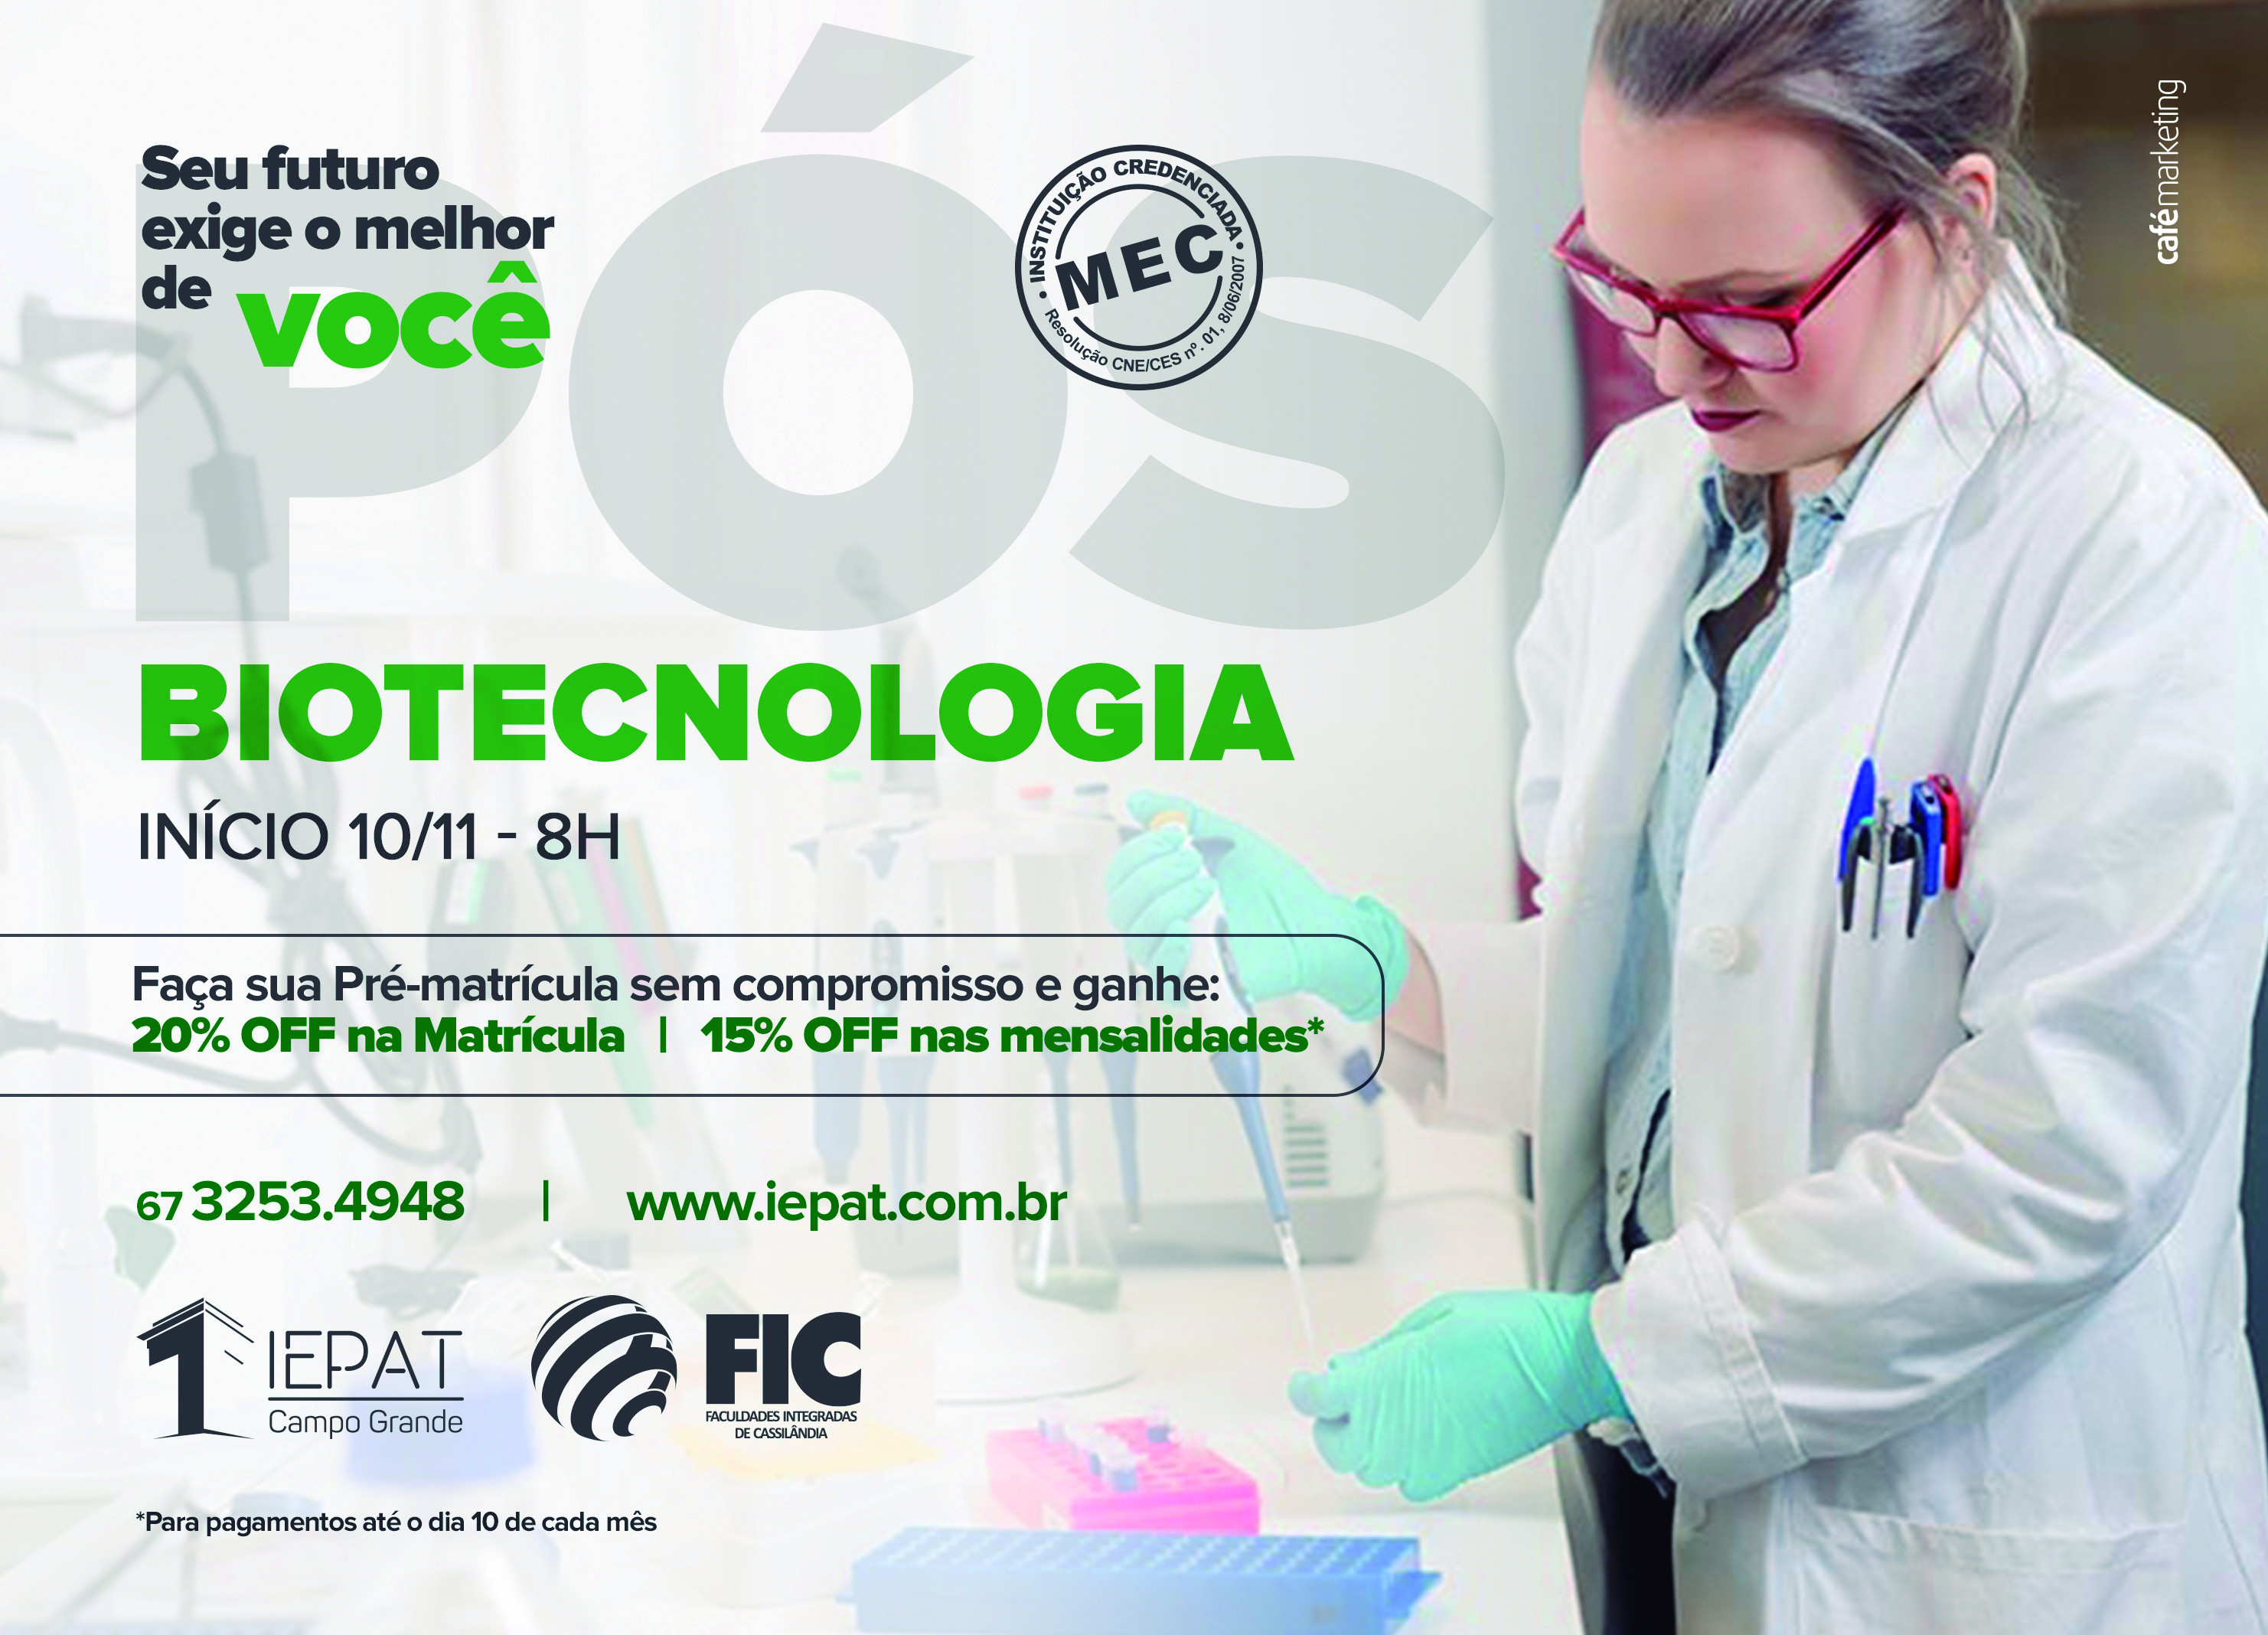 iepat_anuncio_revista_biotecnologia